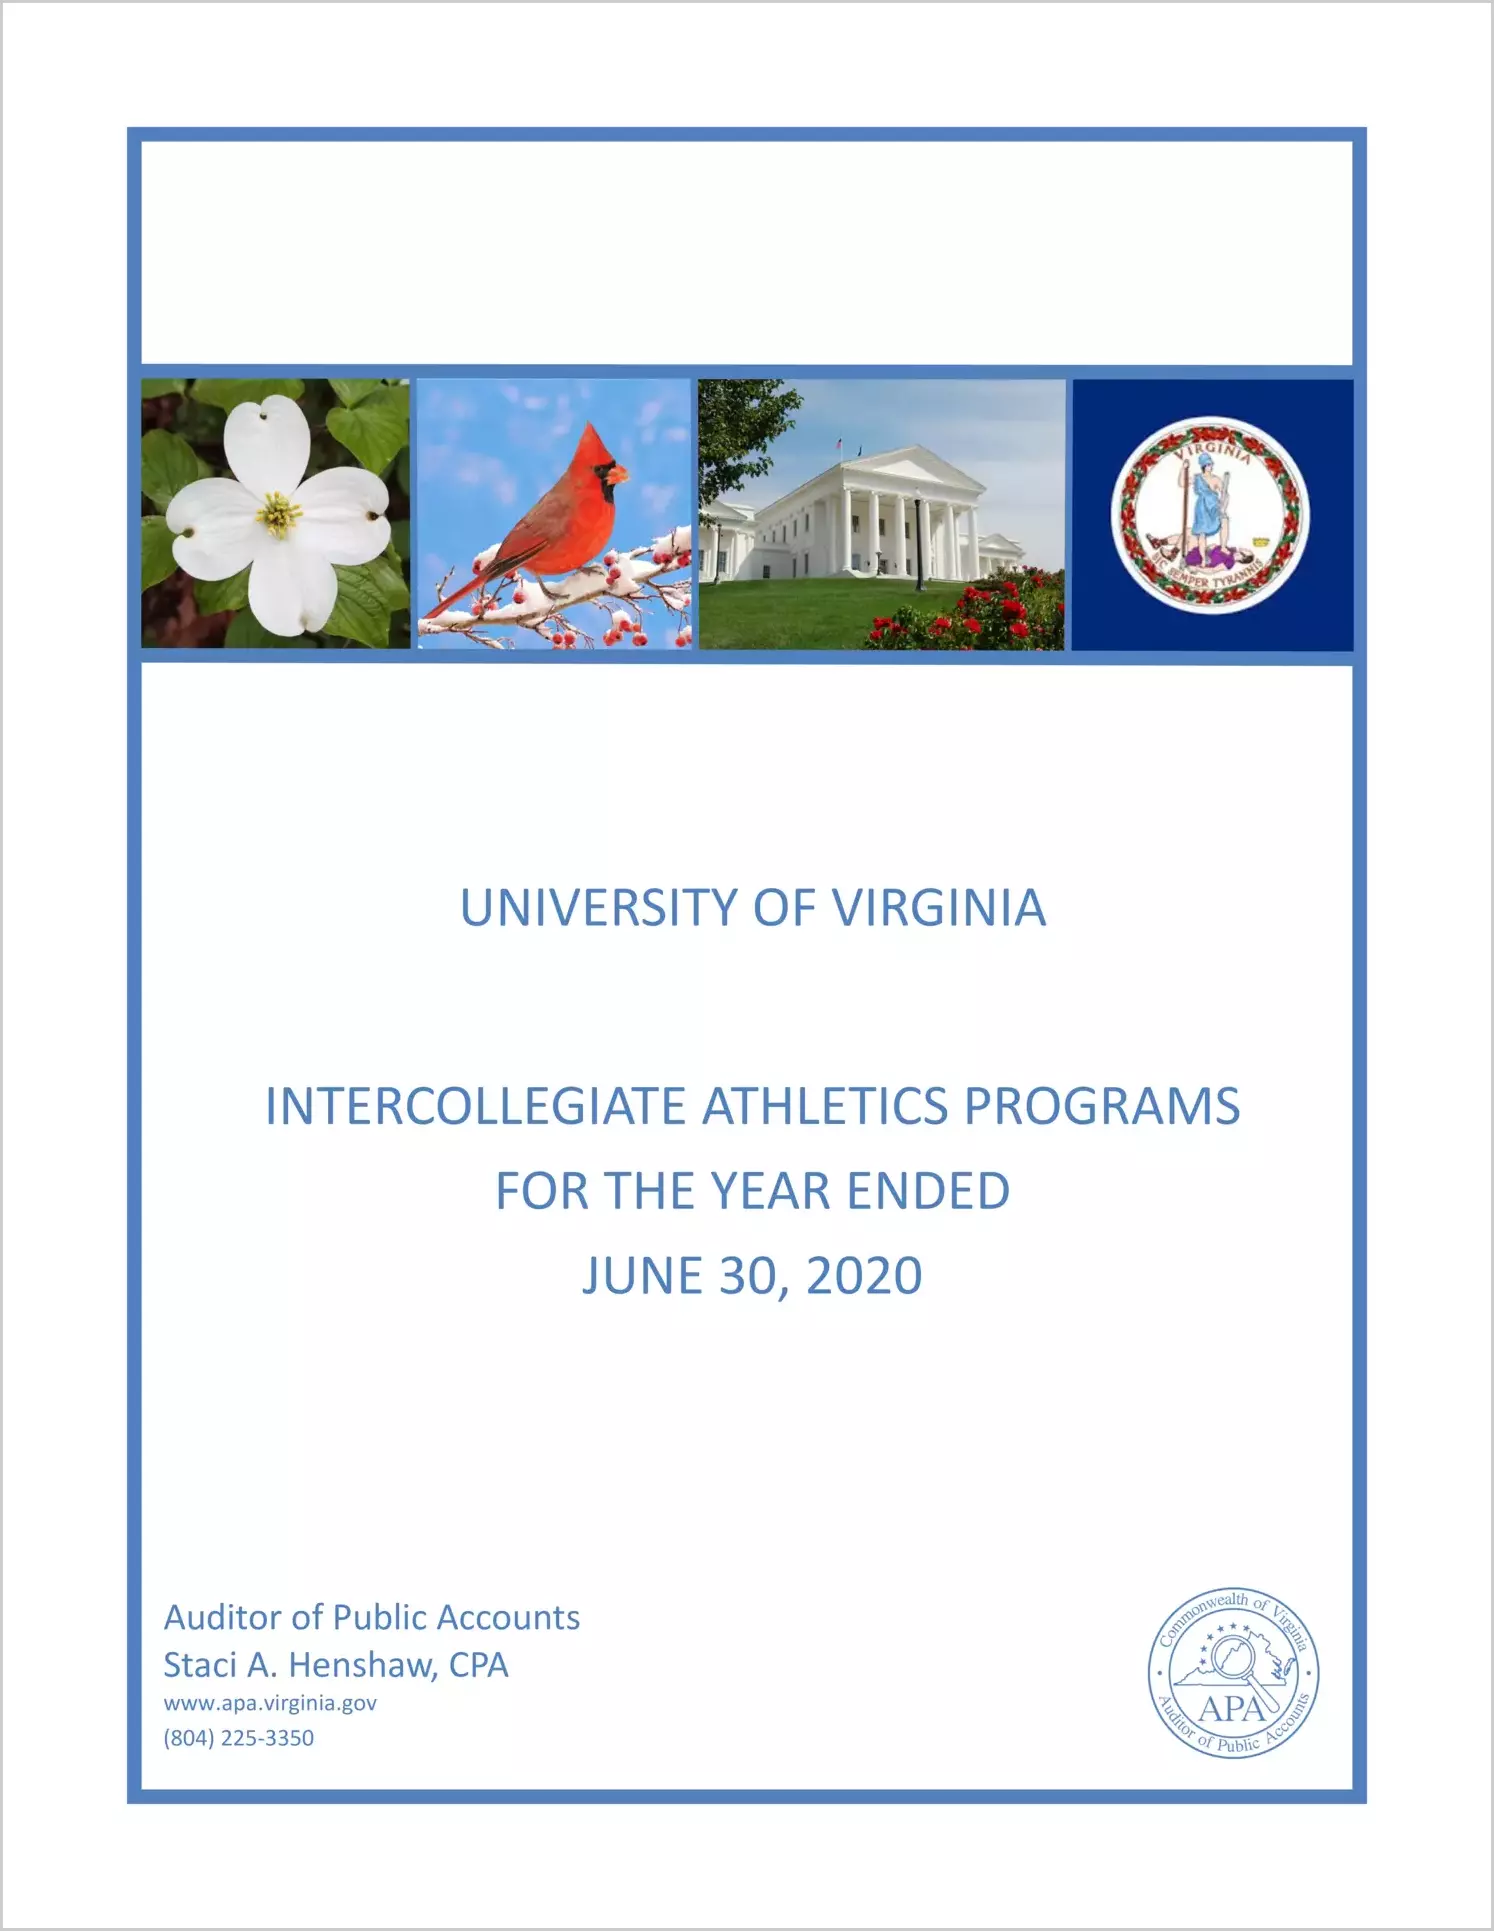 University of Virginia Intercollegiate Athletics Programs for the year ended June 30, 2020